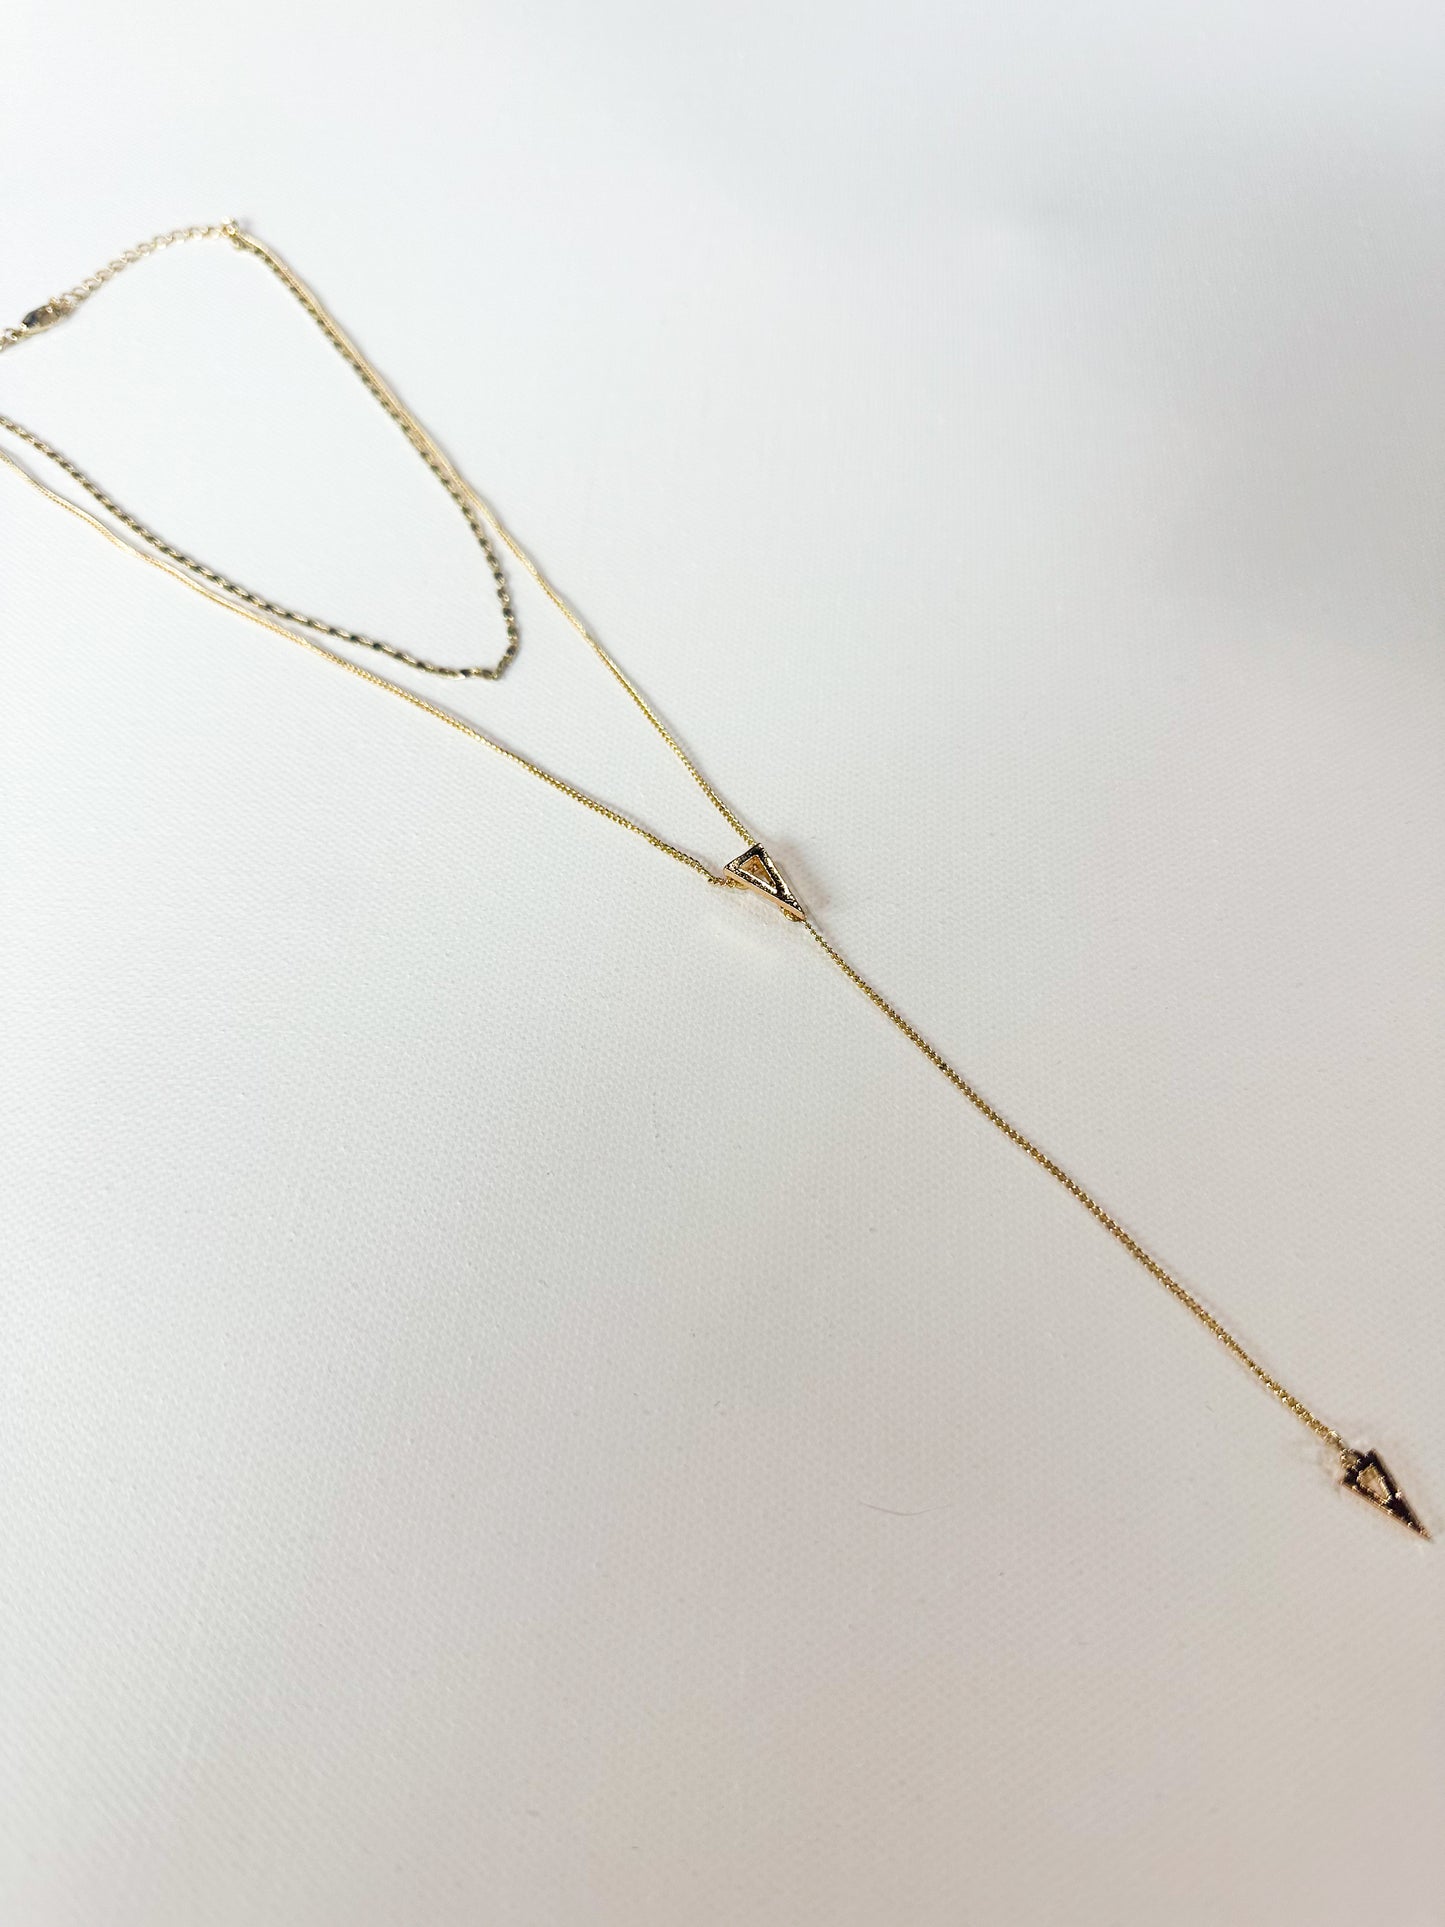 Bermuda triangle necklace